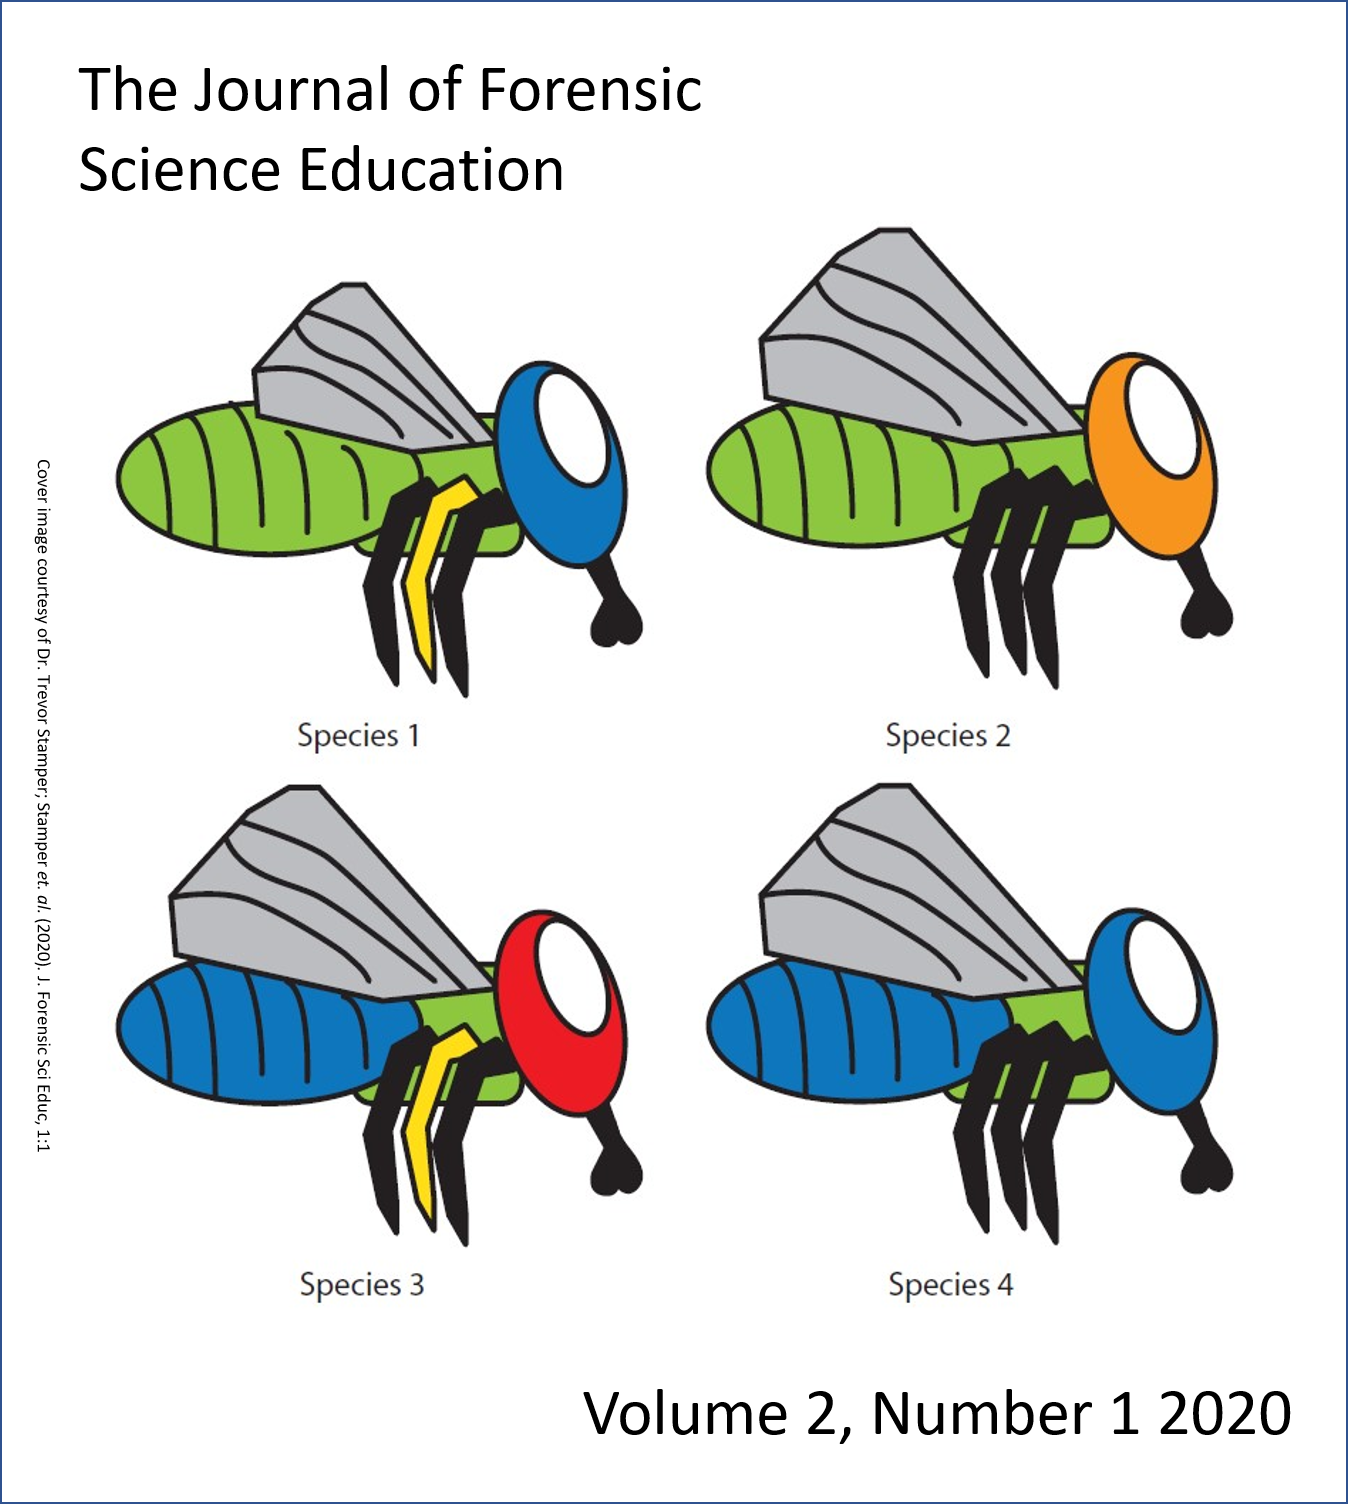 Illustration of four hand-drawn Calliphoridae flies, taken from Stamper 2020